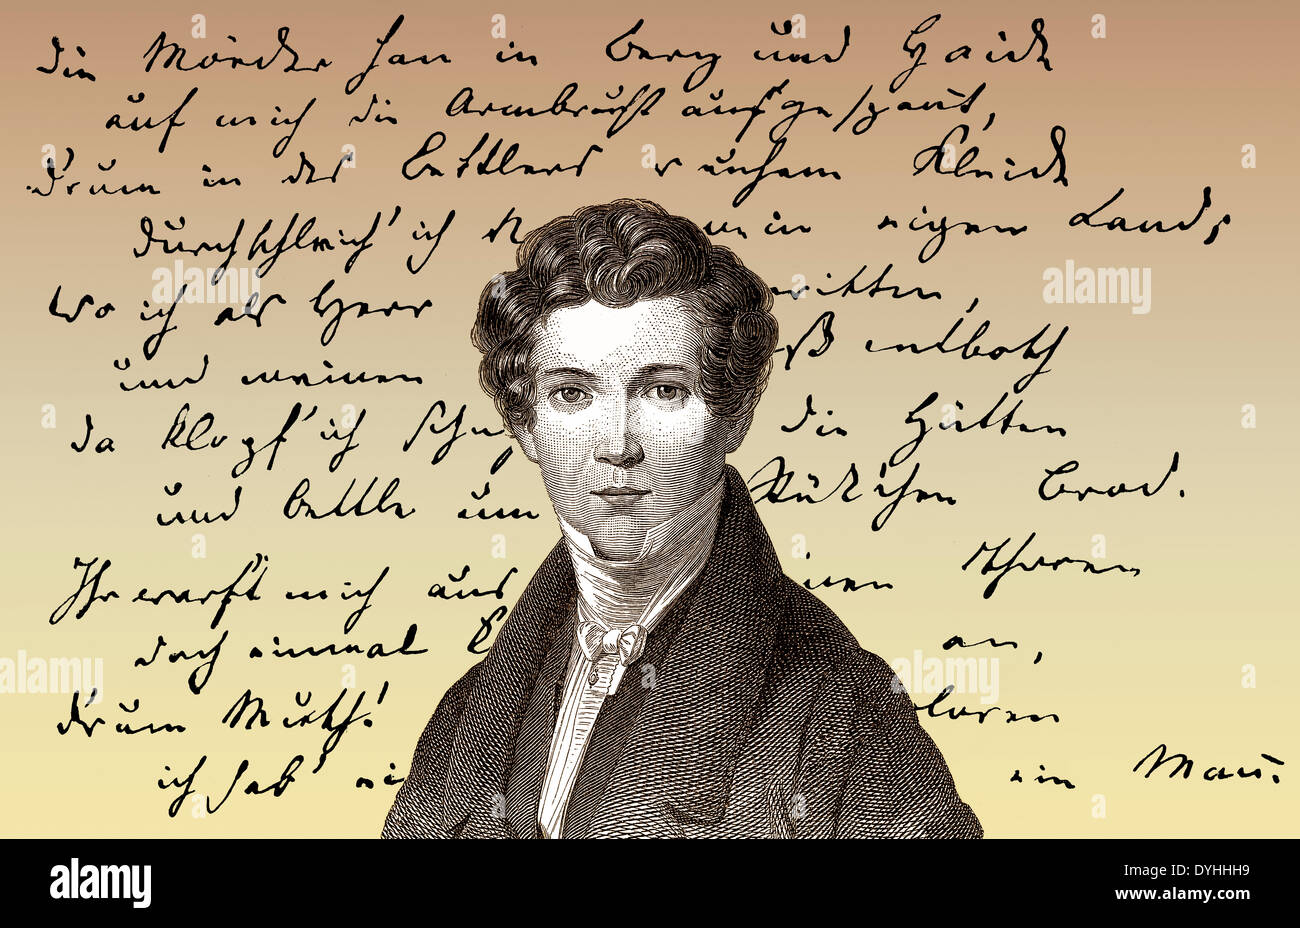 Historical manuscript and portrait of Wilhelm Hauff, 1802 - 1827, a German writer of the Romantic era Stock Photo